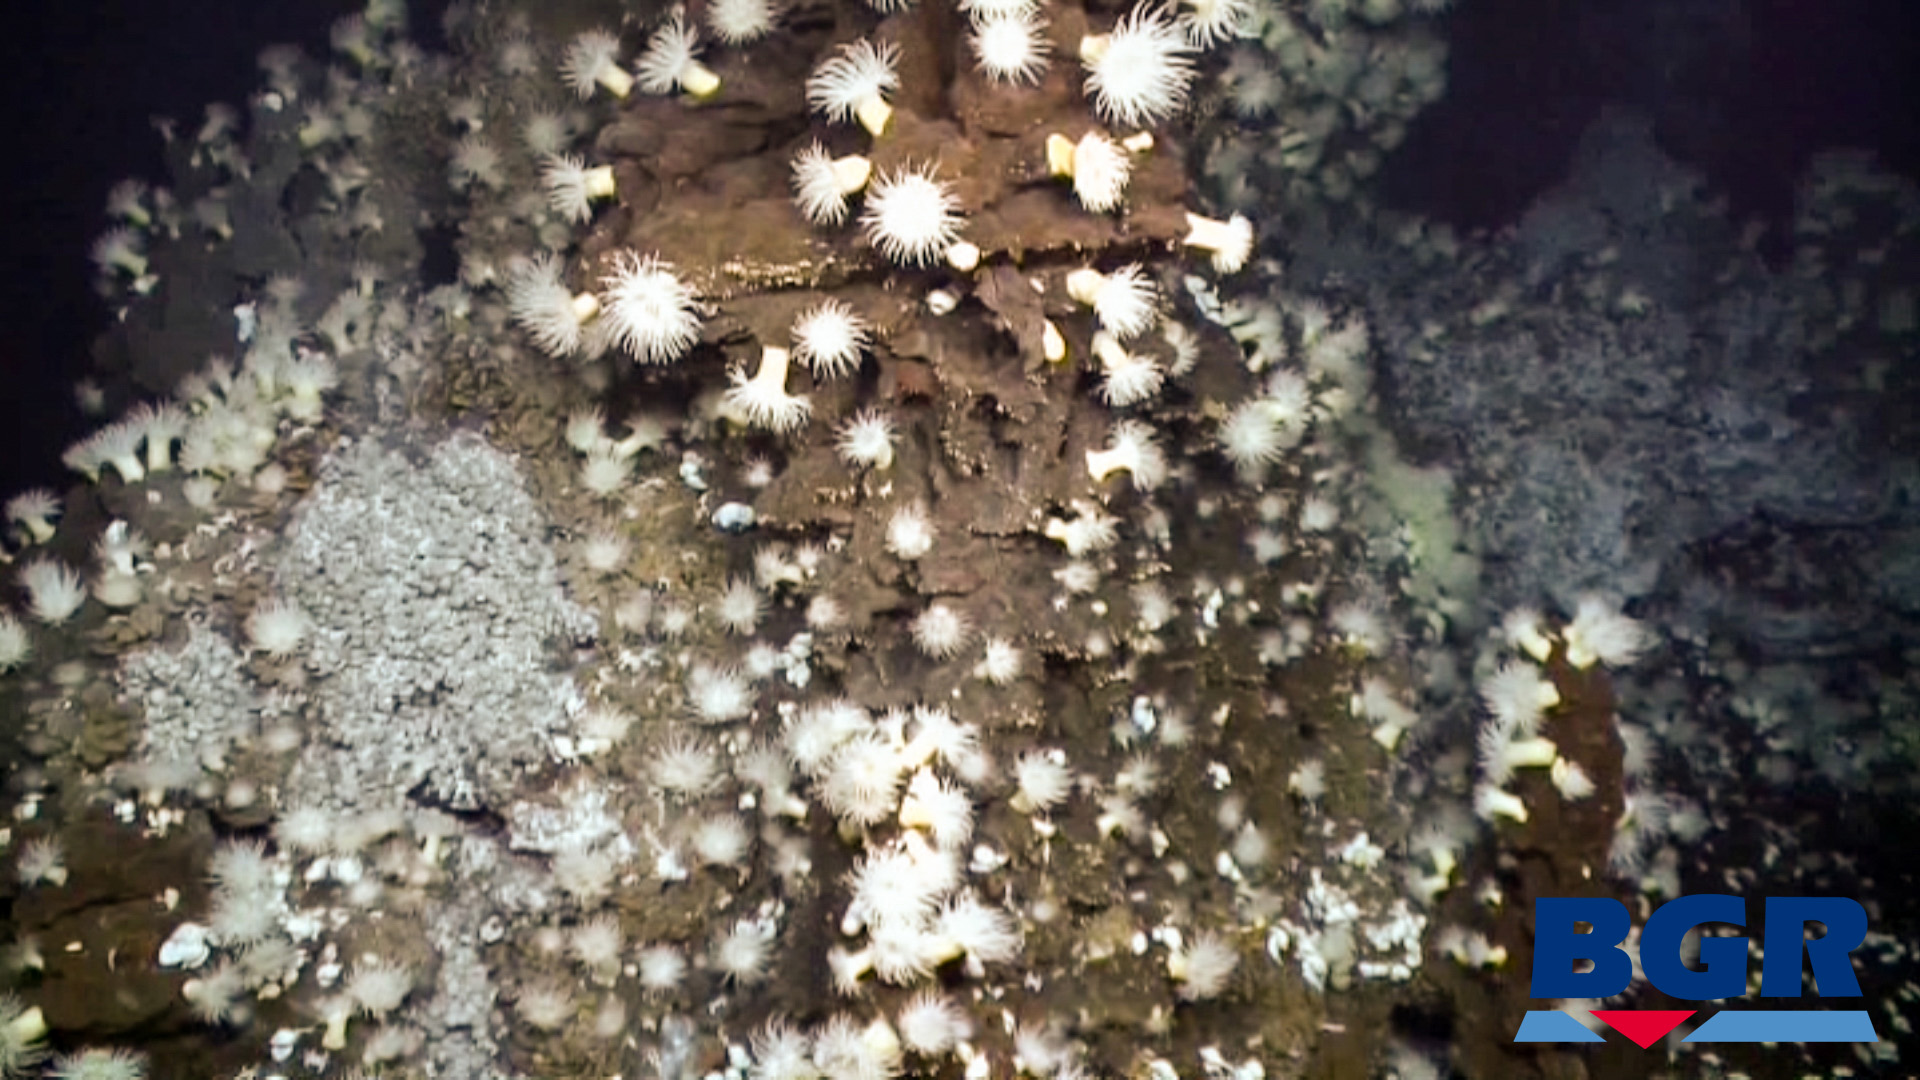 Maractis sea anemones on an underwater vent